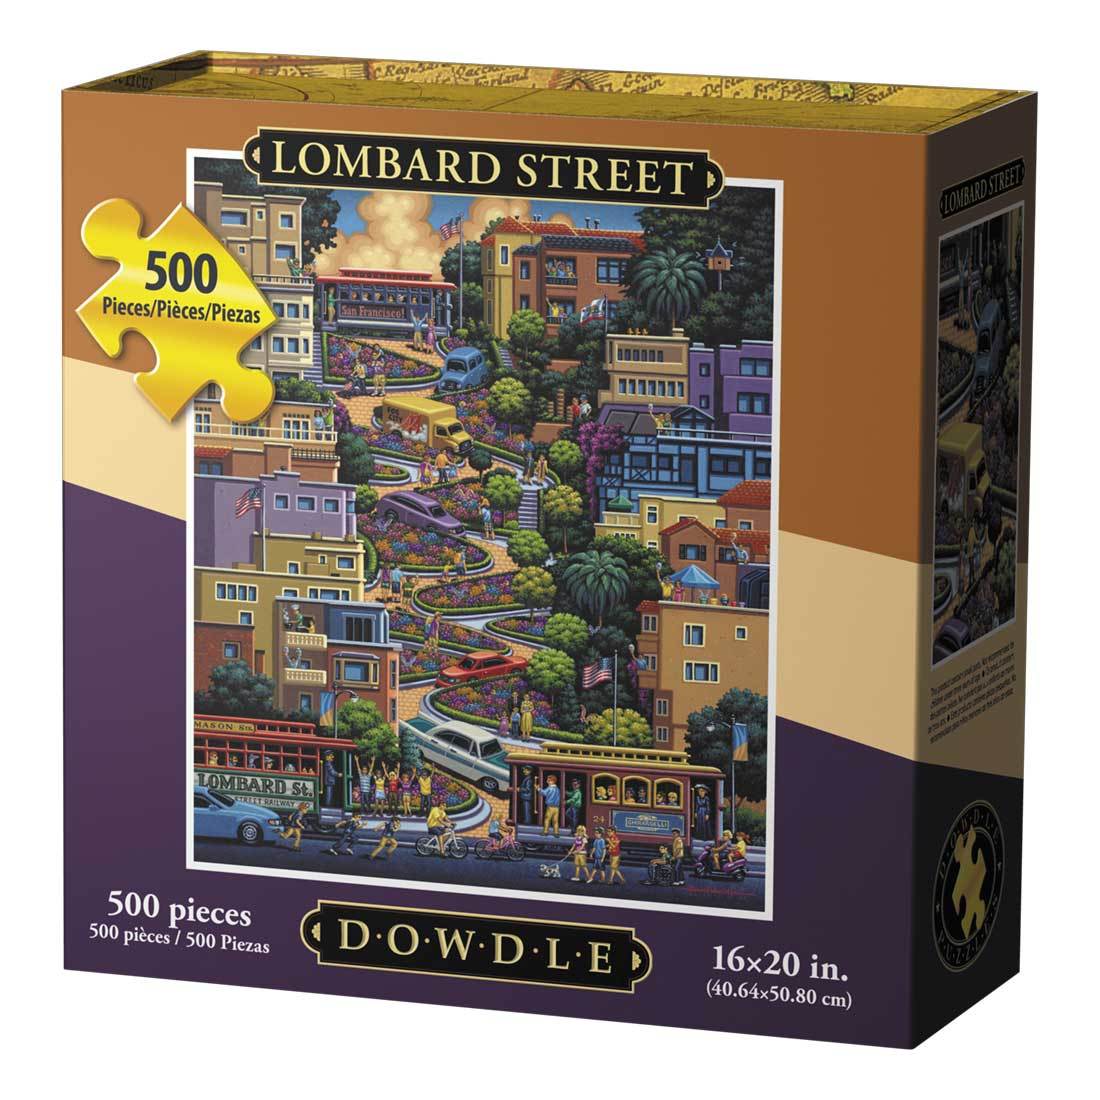 00210 16 X 20 In. Lombard Street Jigsaw Puzzle - 500 Piece